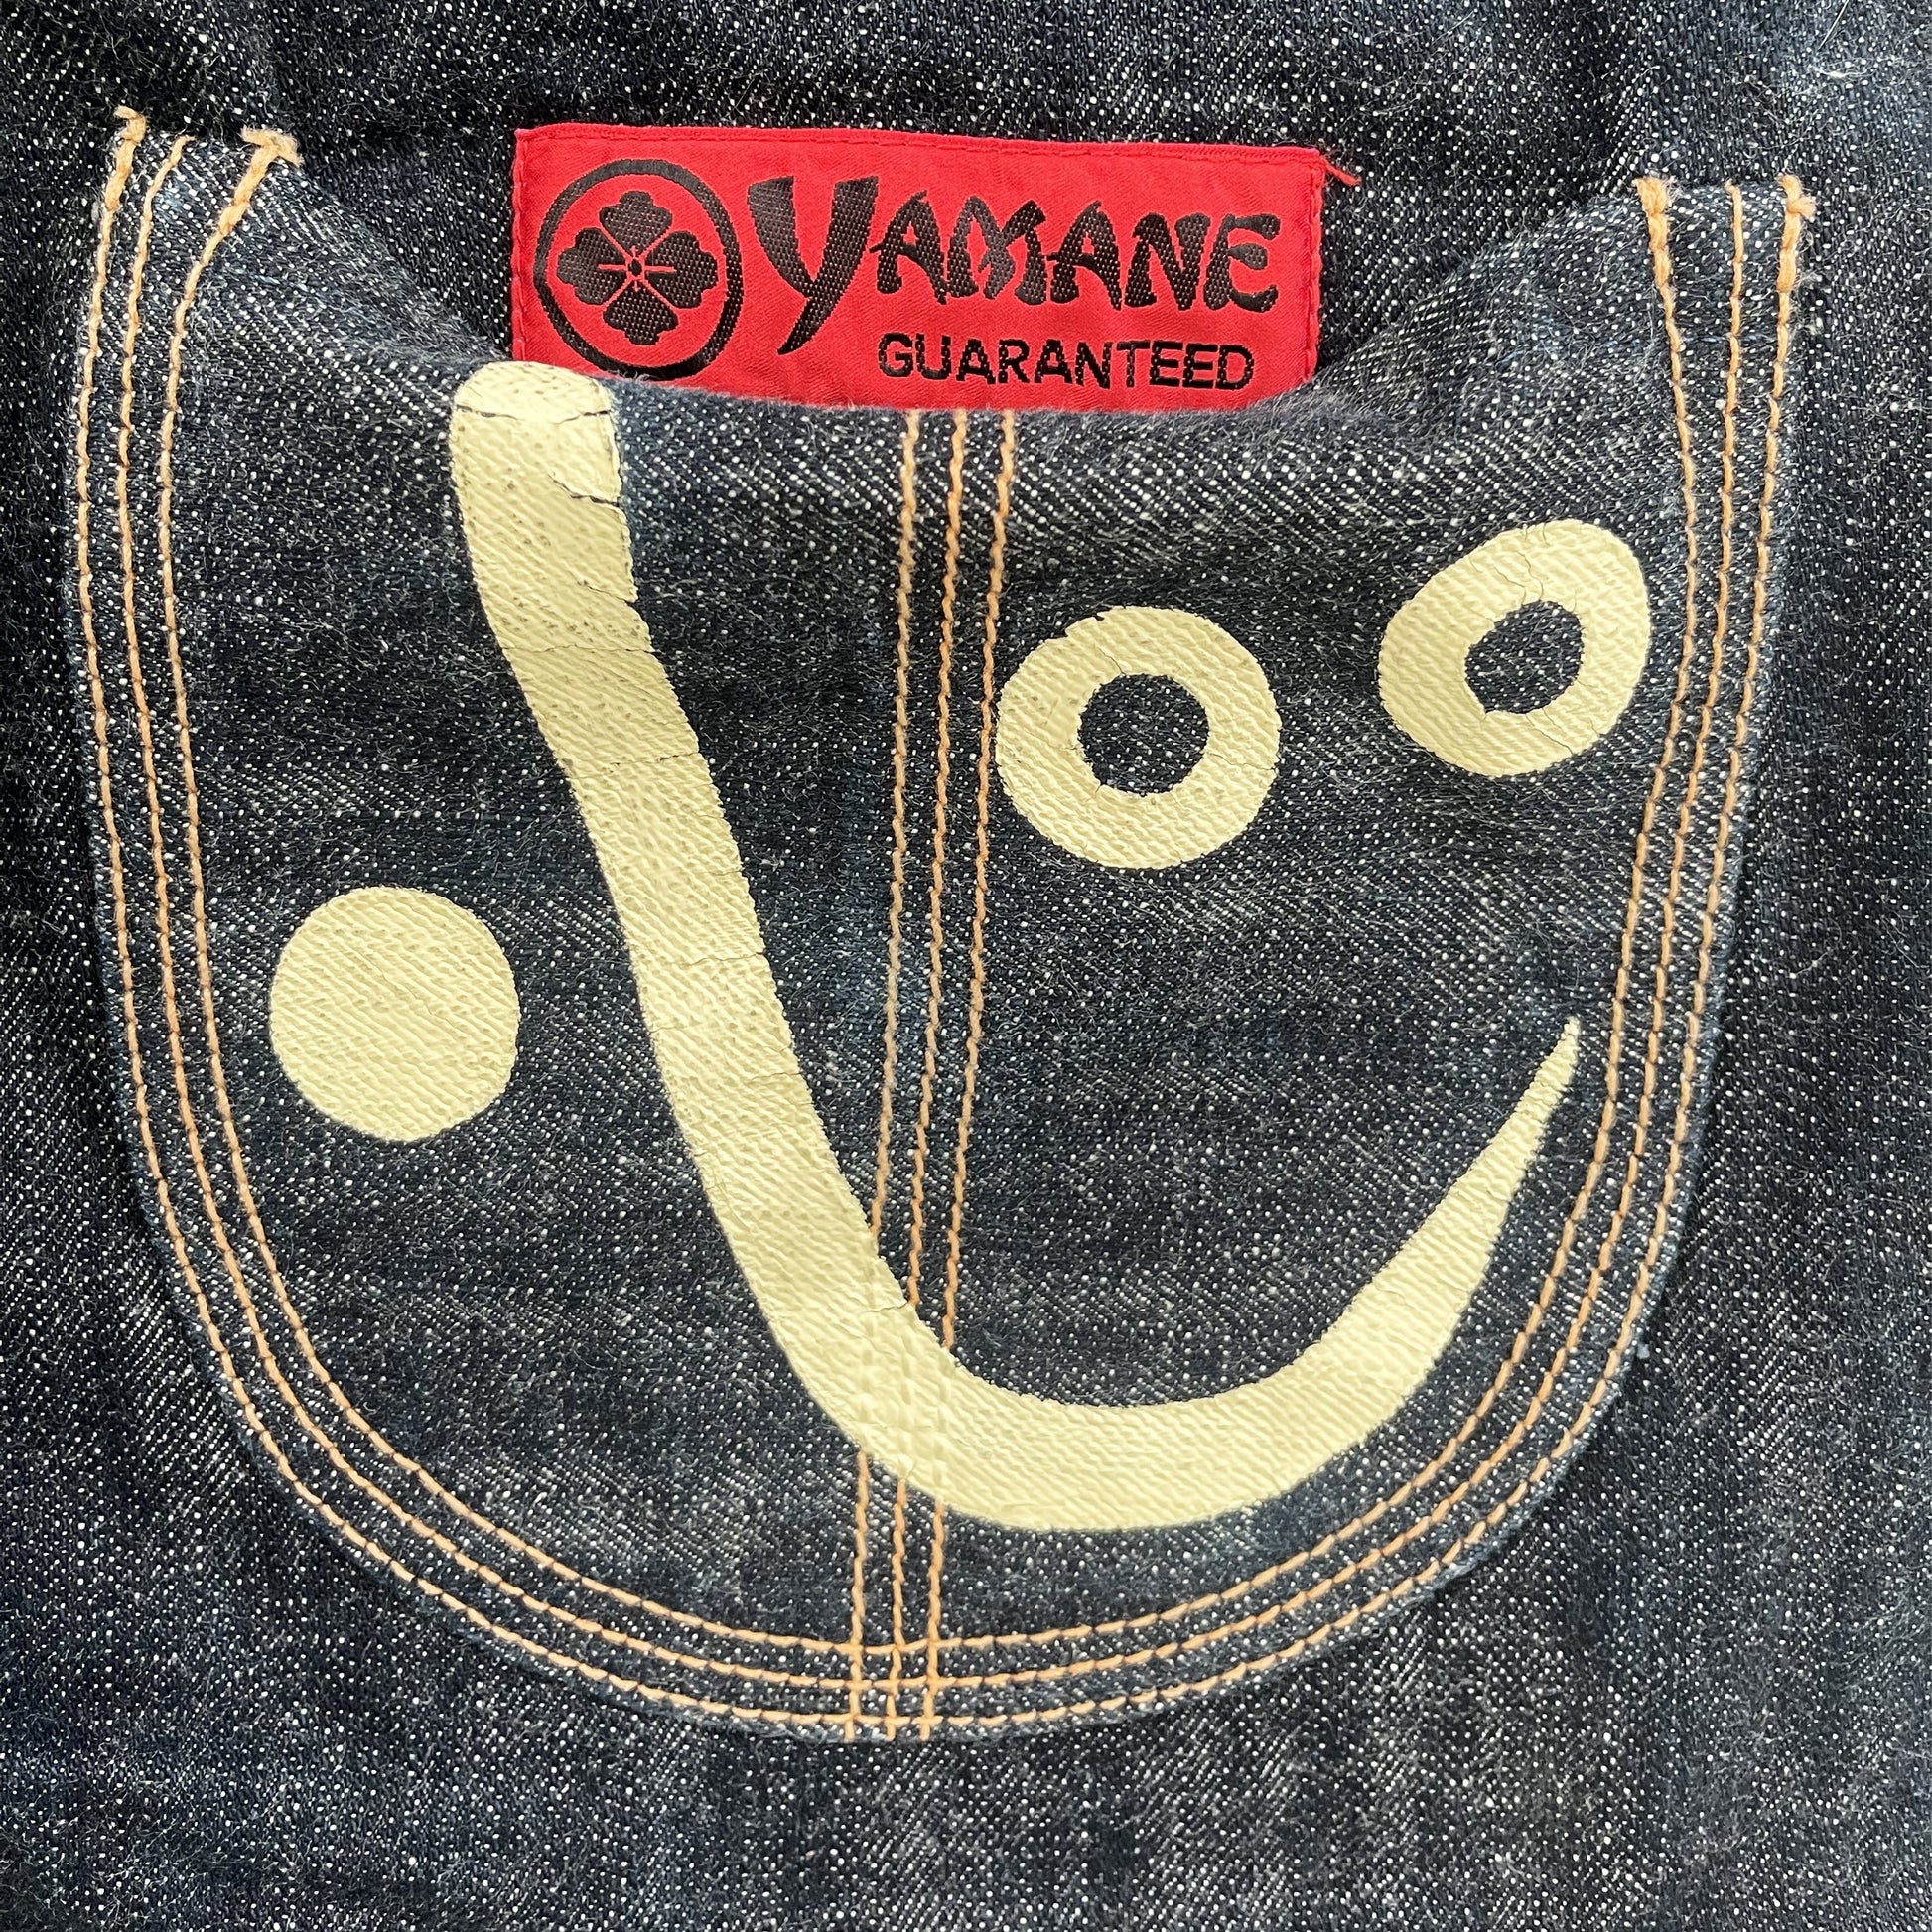 Evisu Yamane Jeans